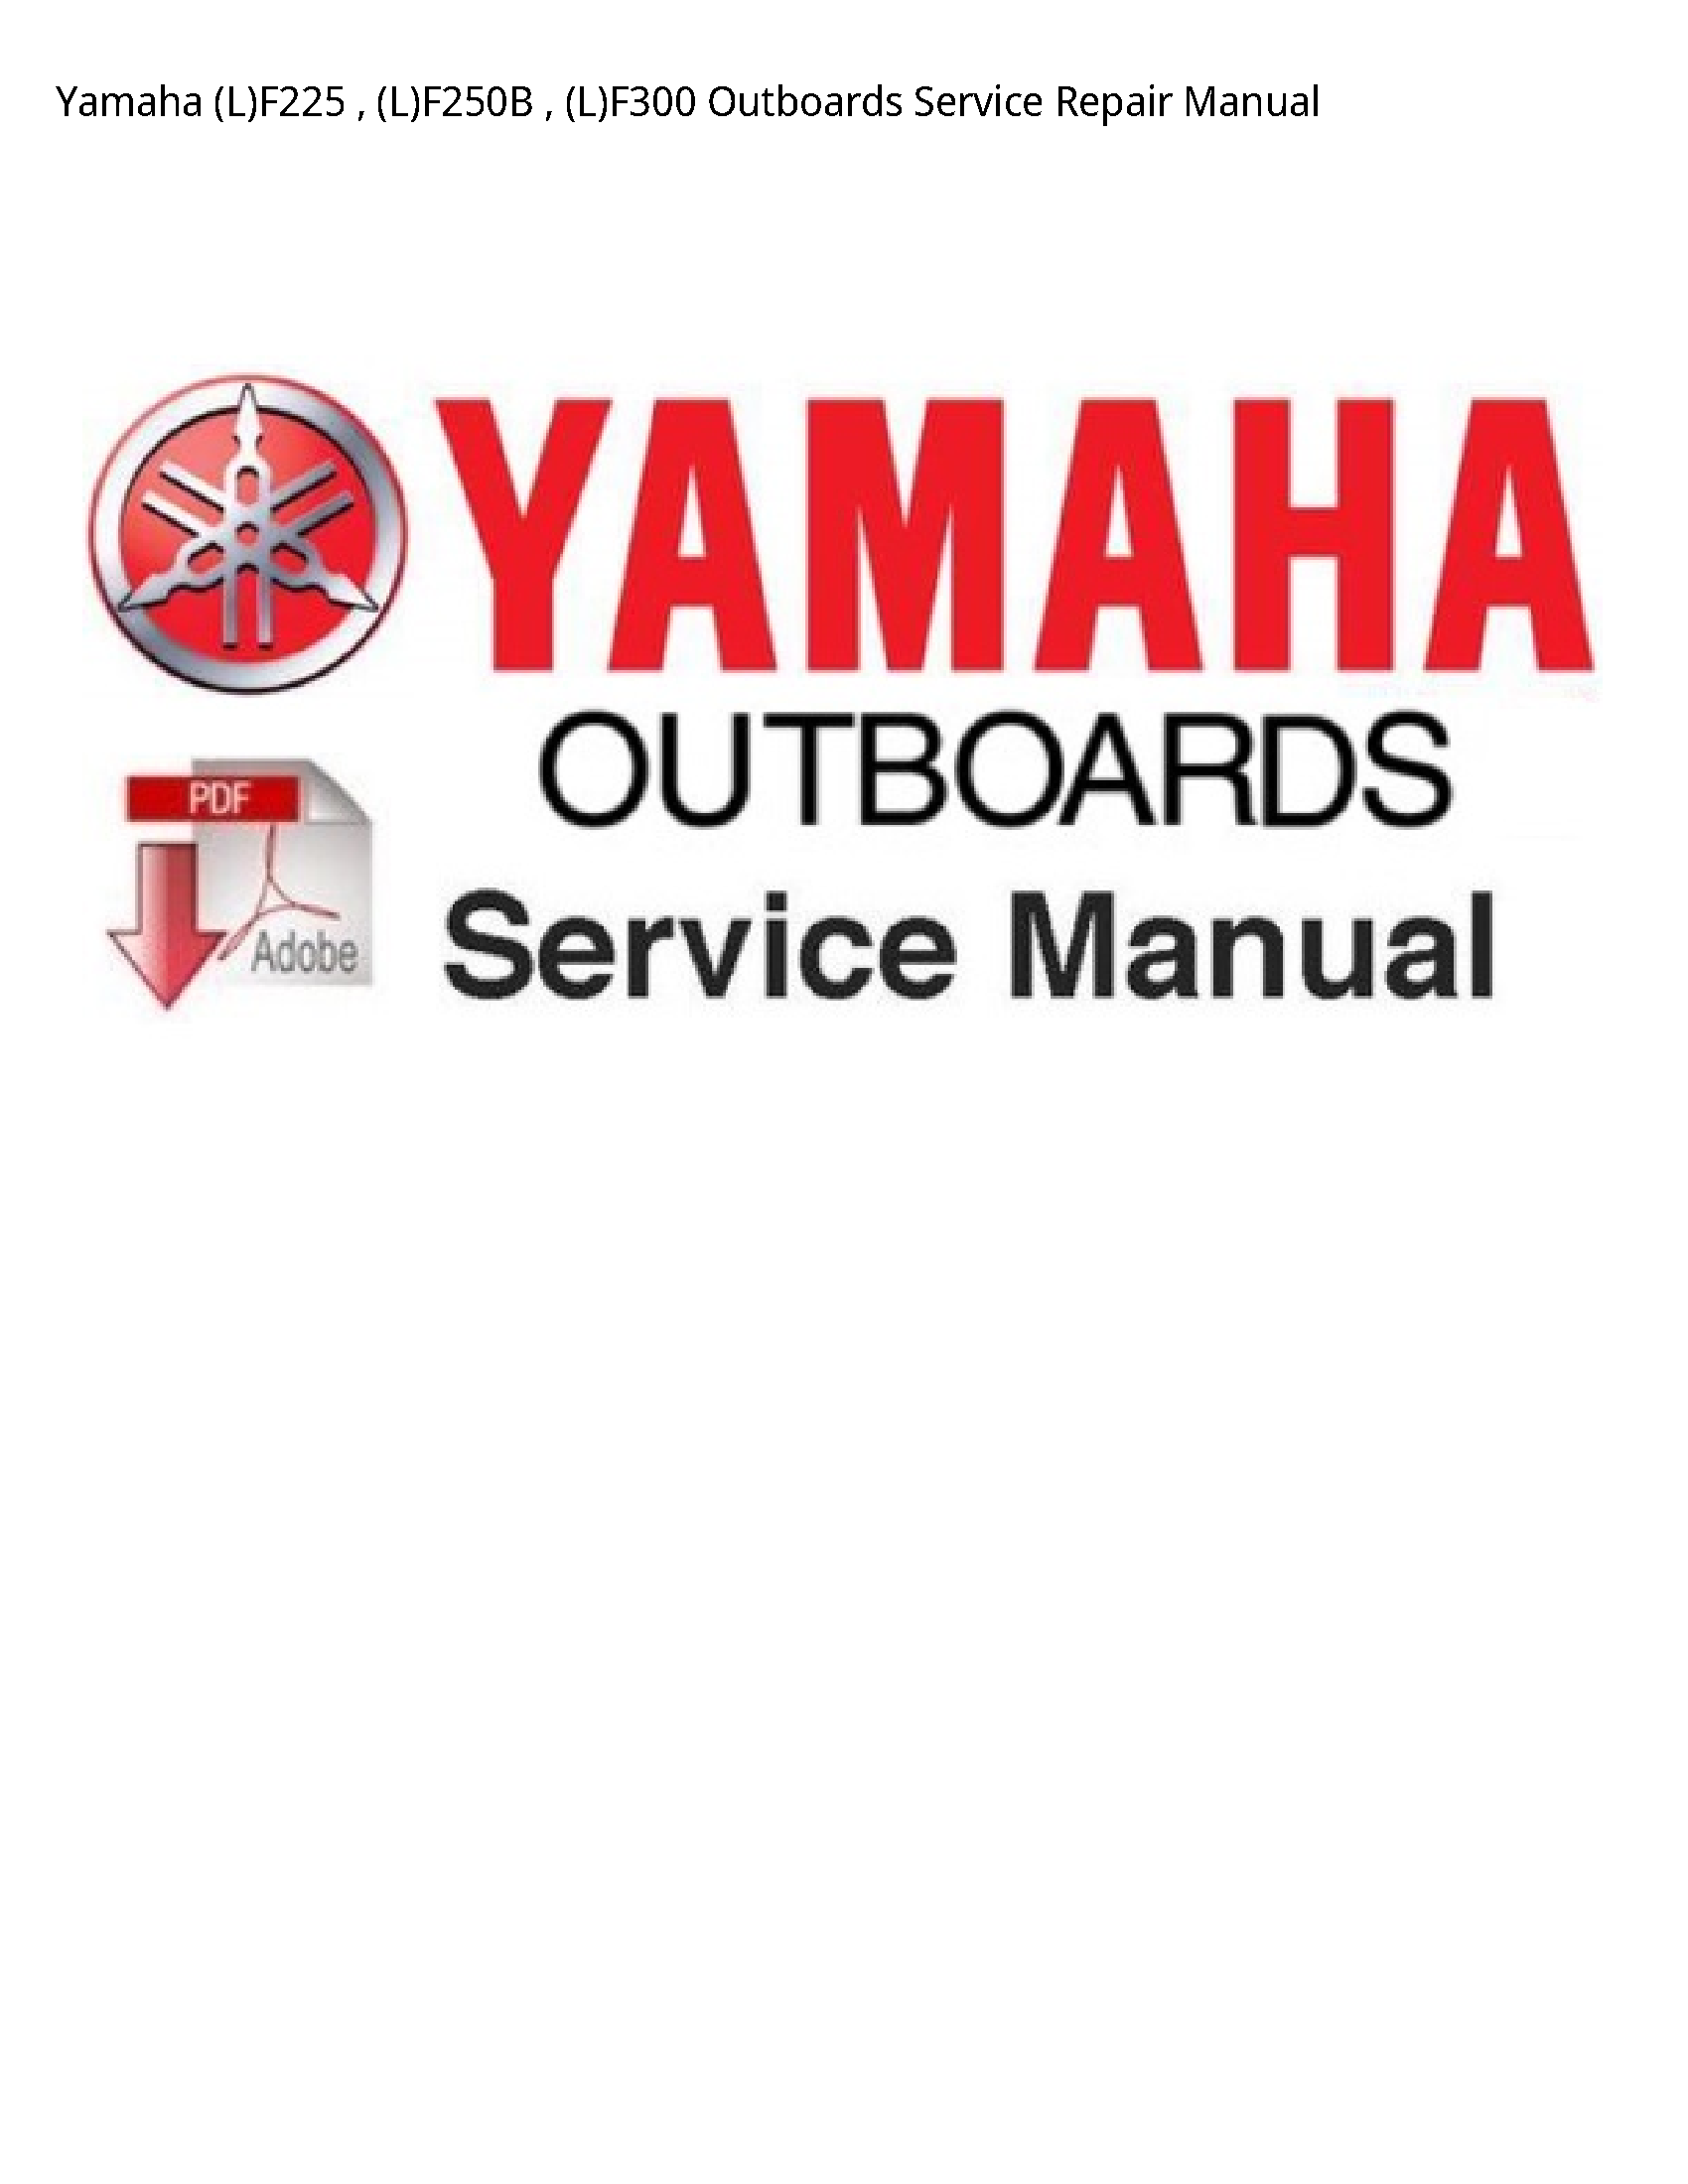 Yamaha (L)F225 Outboards manual